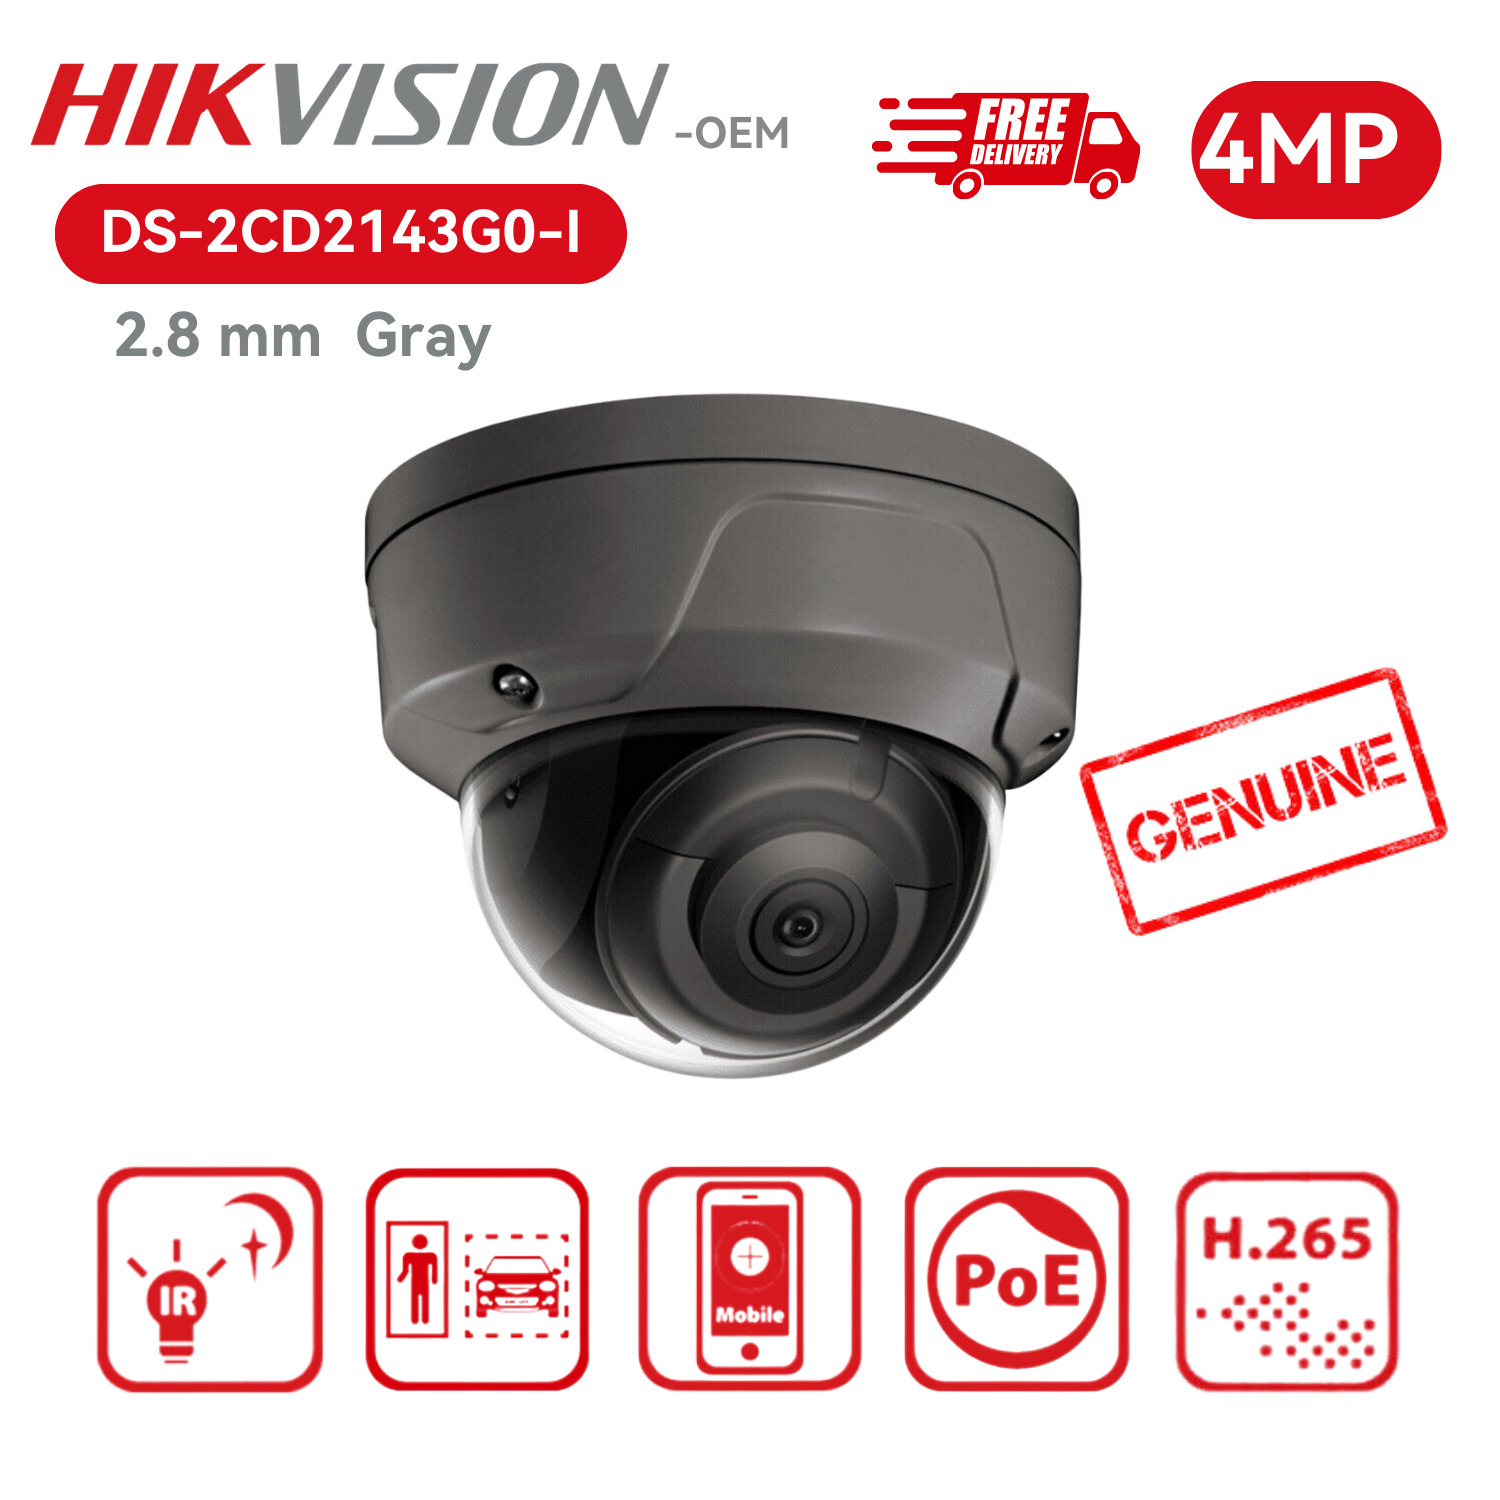 Hikvision OEM DS-2CD2143G0-I 4MP PoE IP Dome Network Mental Camera Gray 2.8MM